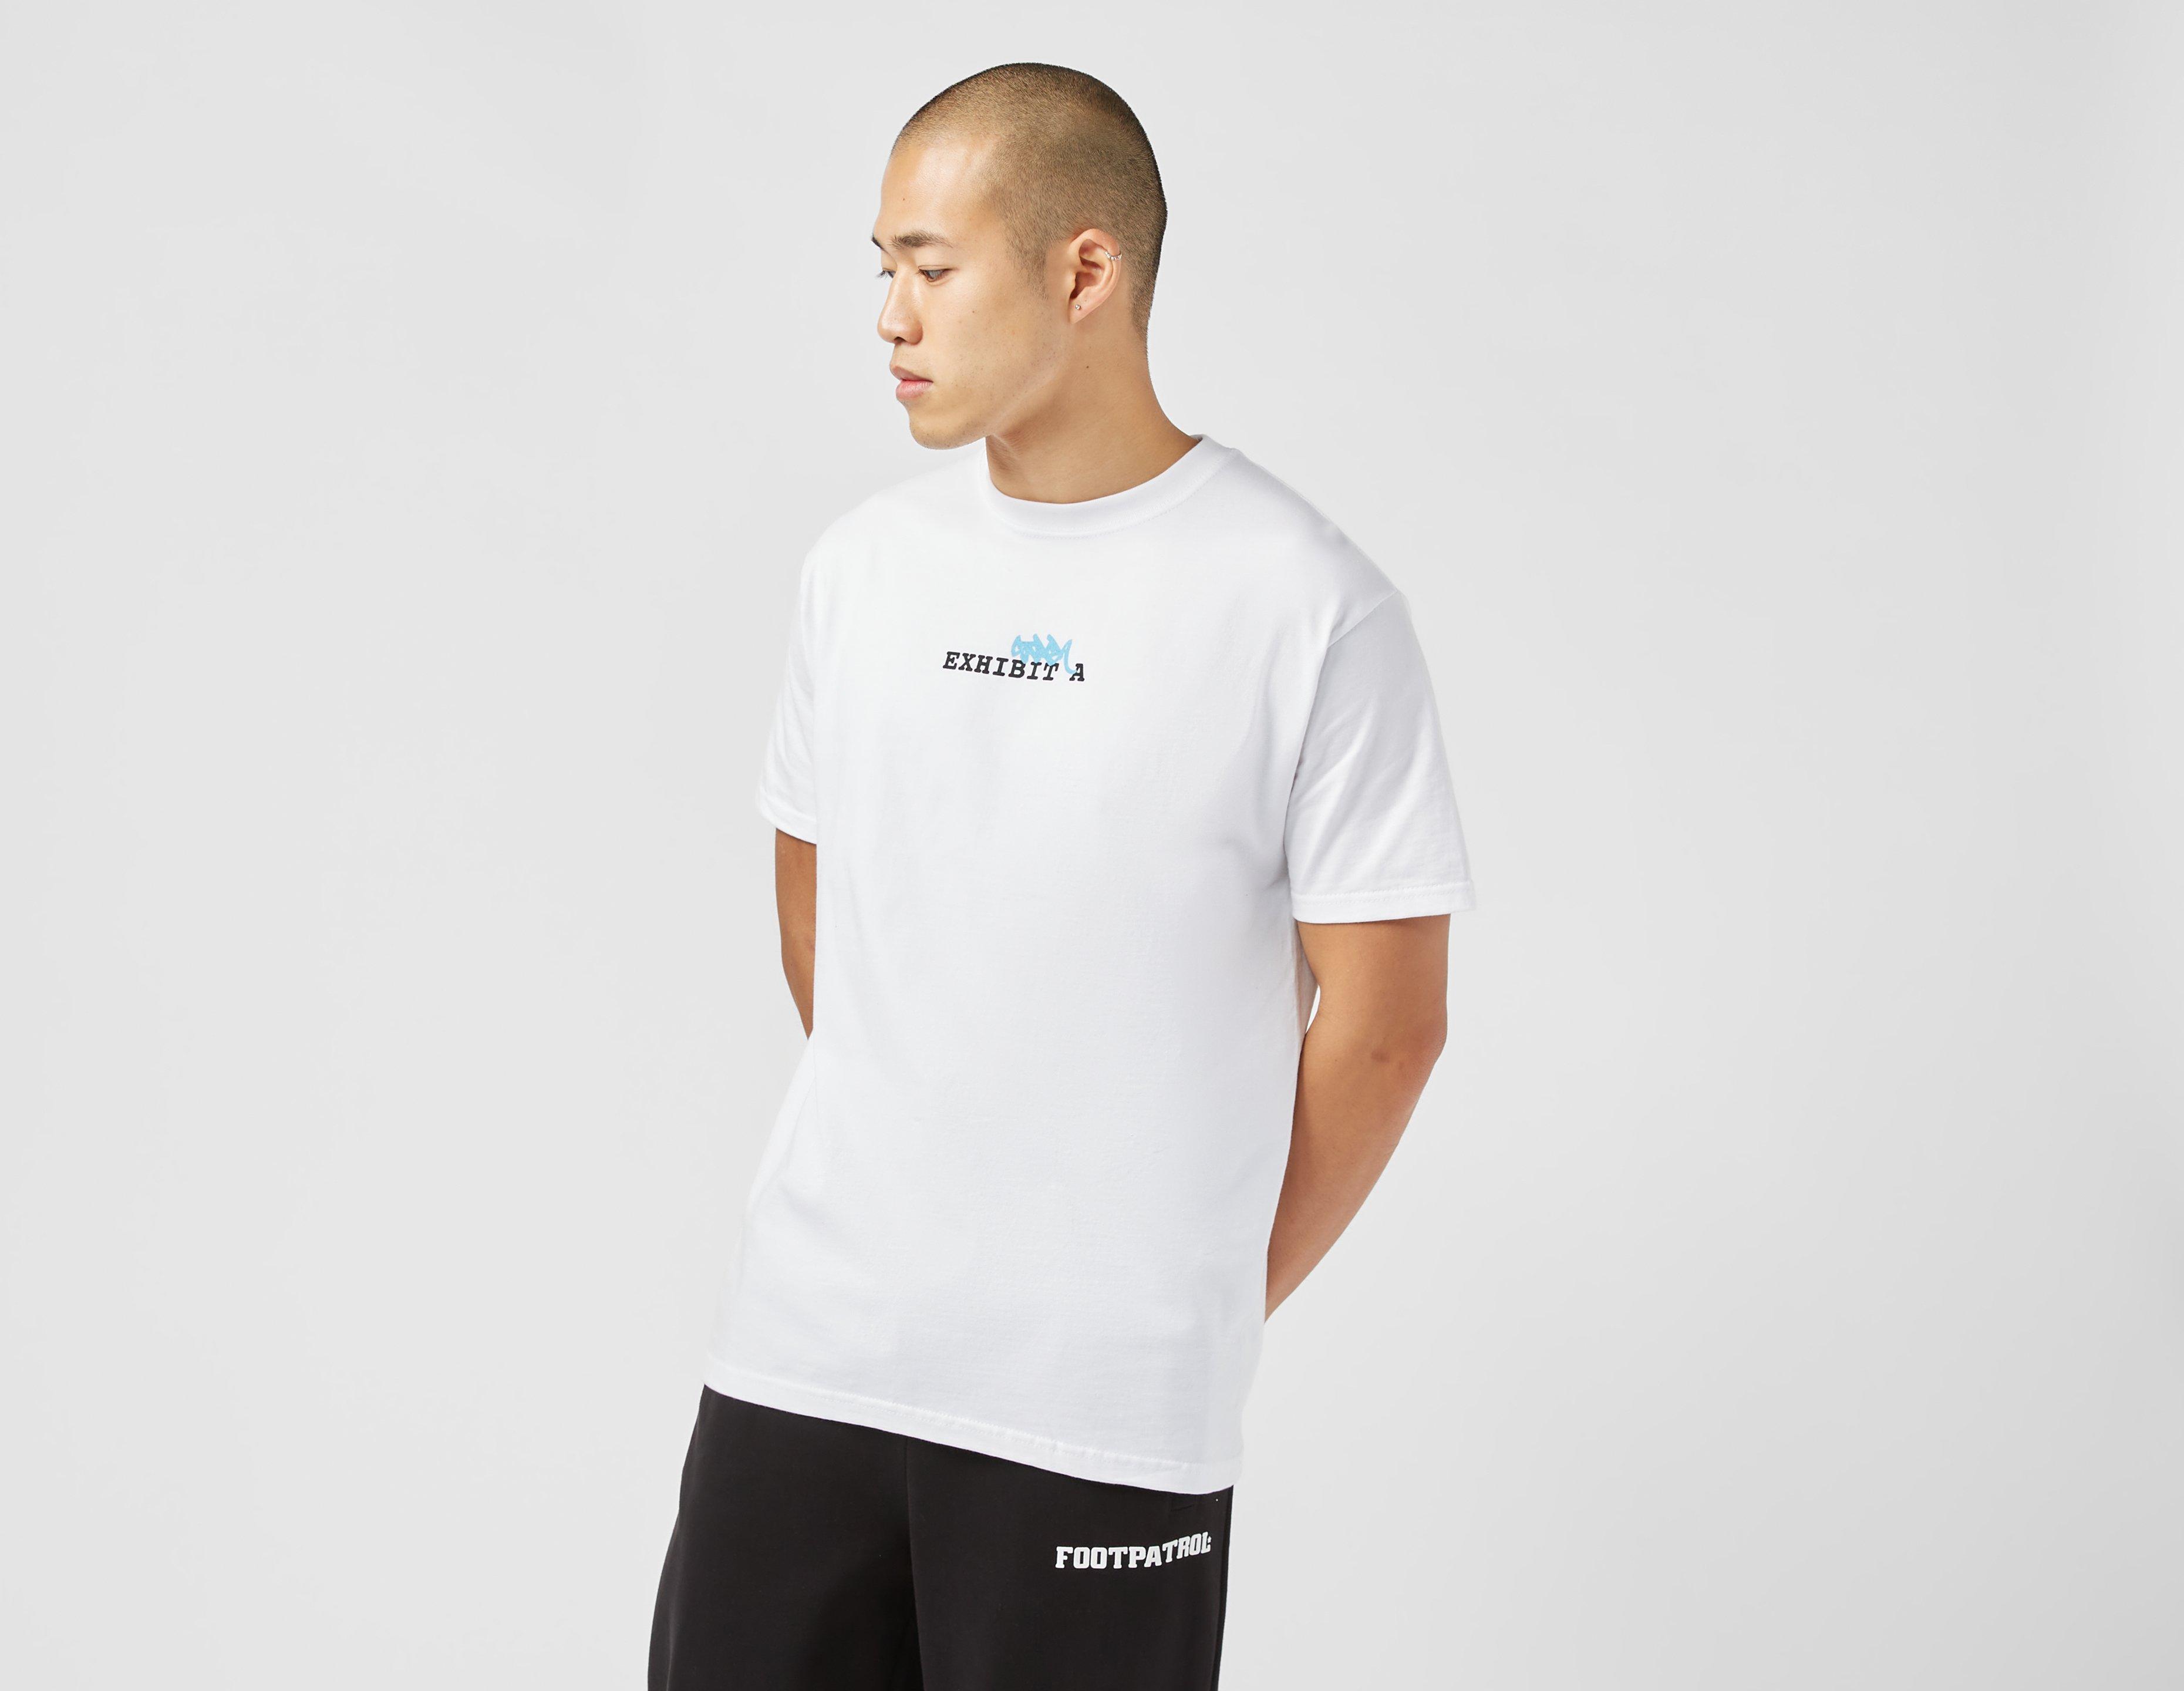 HealthdesignShops - Shirt vintage | White HealthdesignShops x STASH  \'Exhibit A\' T - T-shirt vintage Col Rond Tech Logo